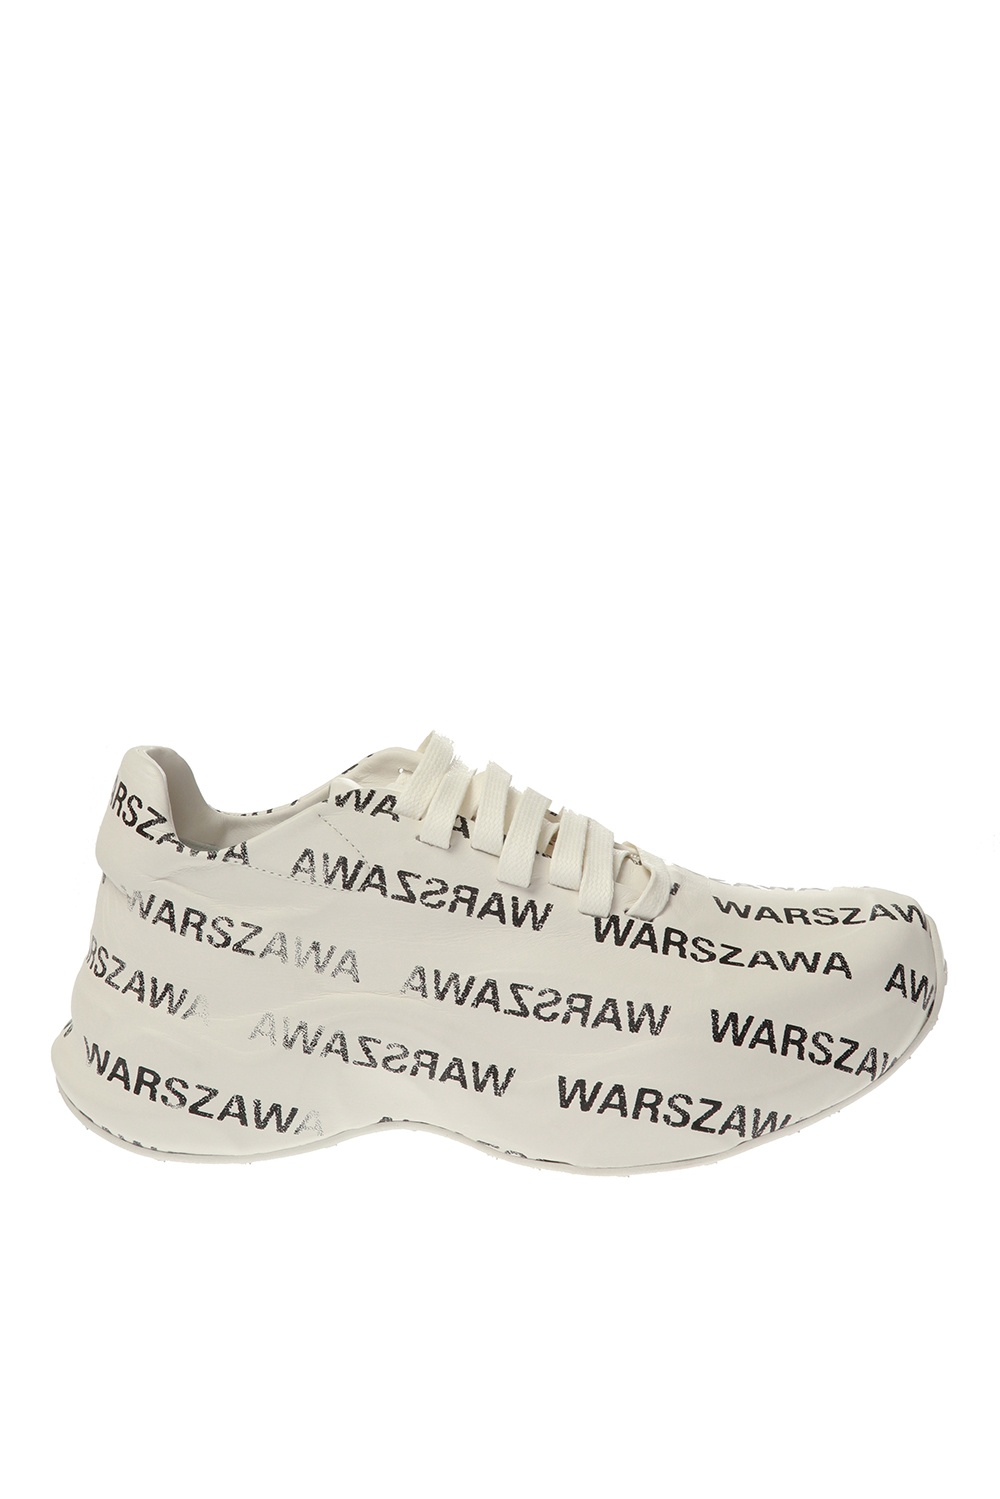 Warszawa Moon Sneakers Misbhv Gov Us